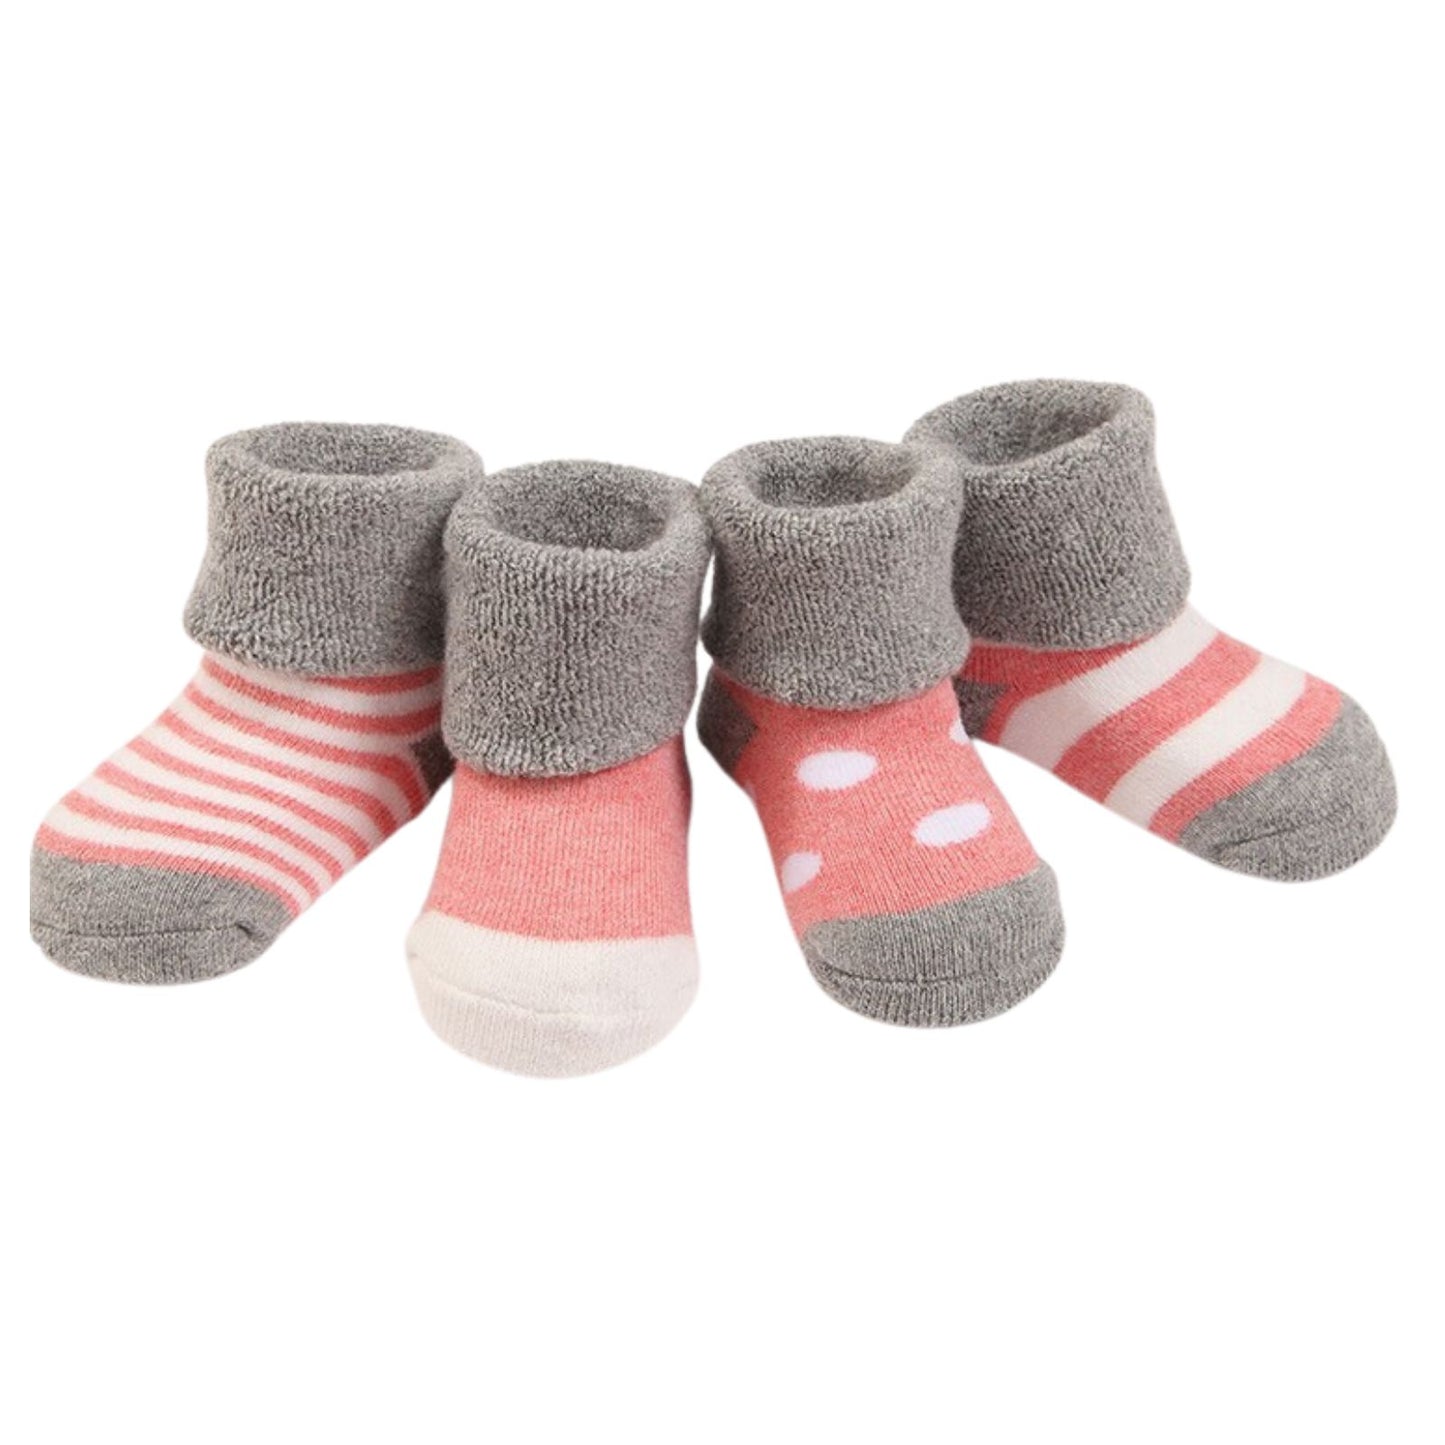 4 Pairs Kids Toddler Infant Cotton Socks